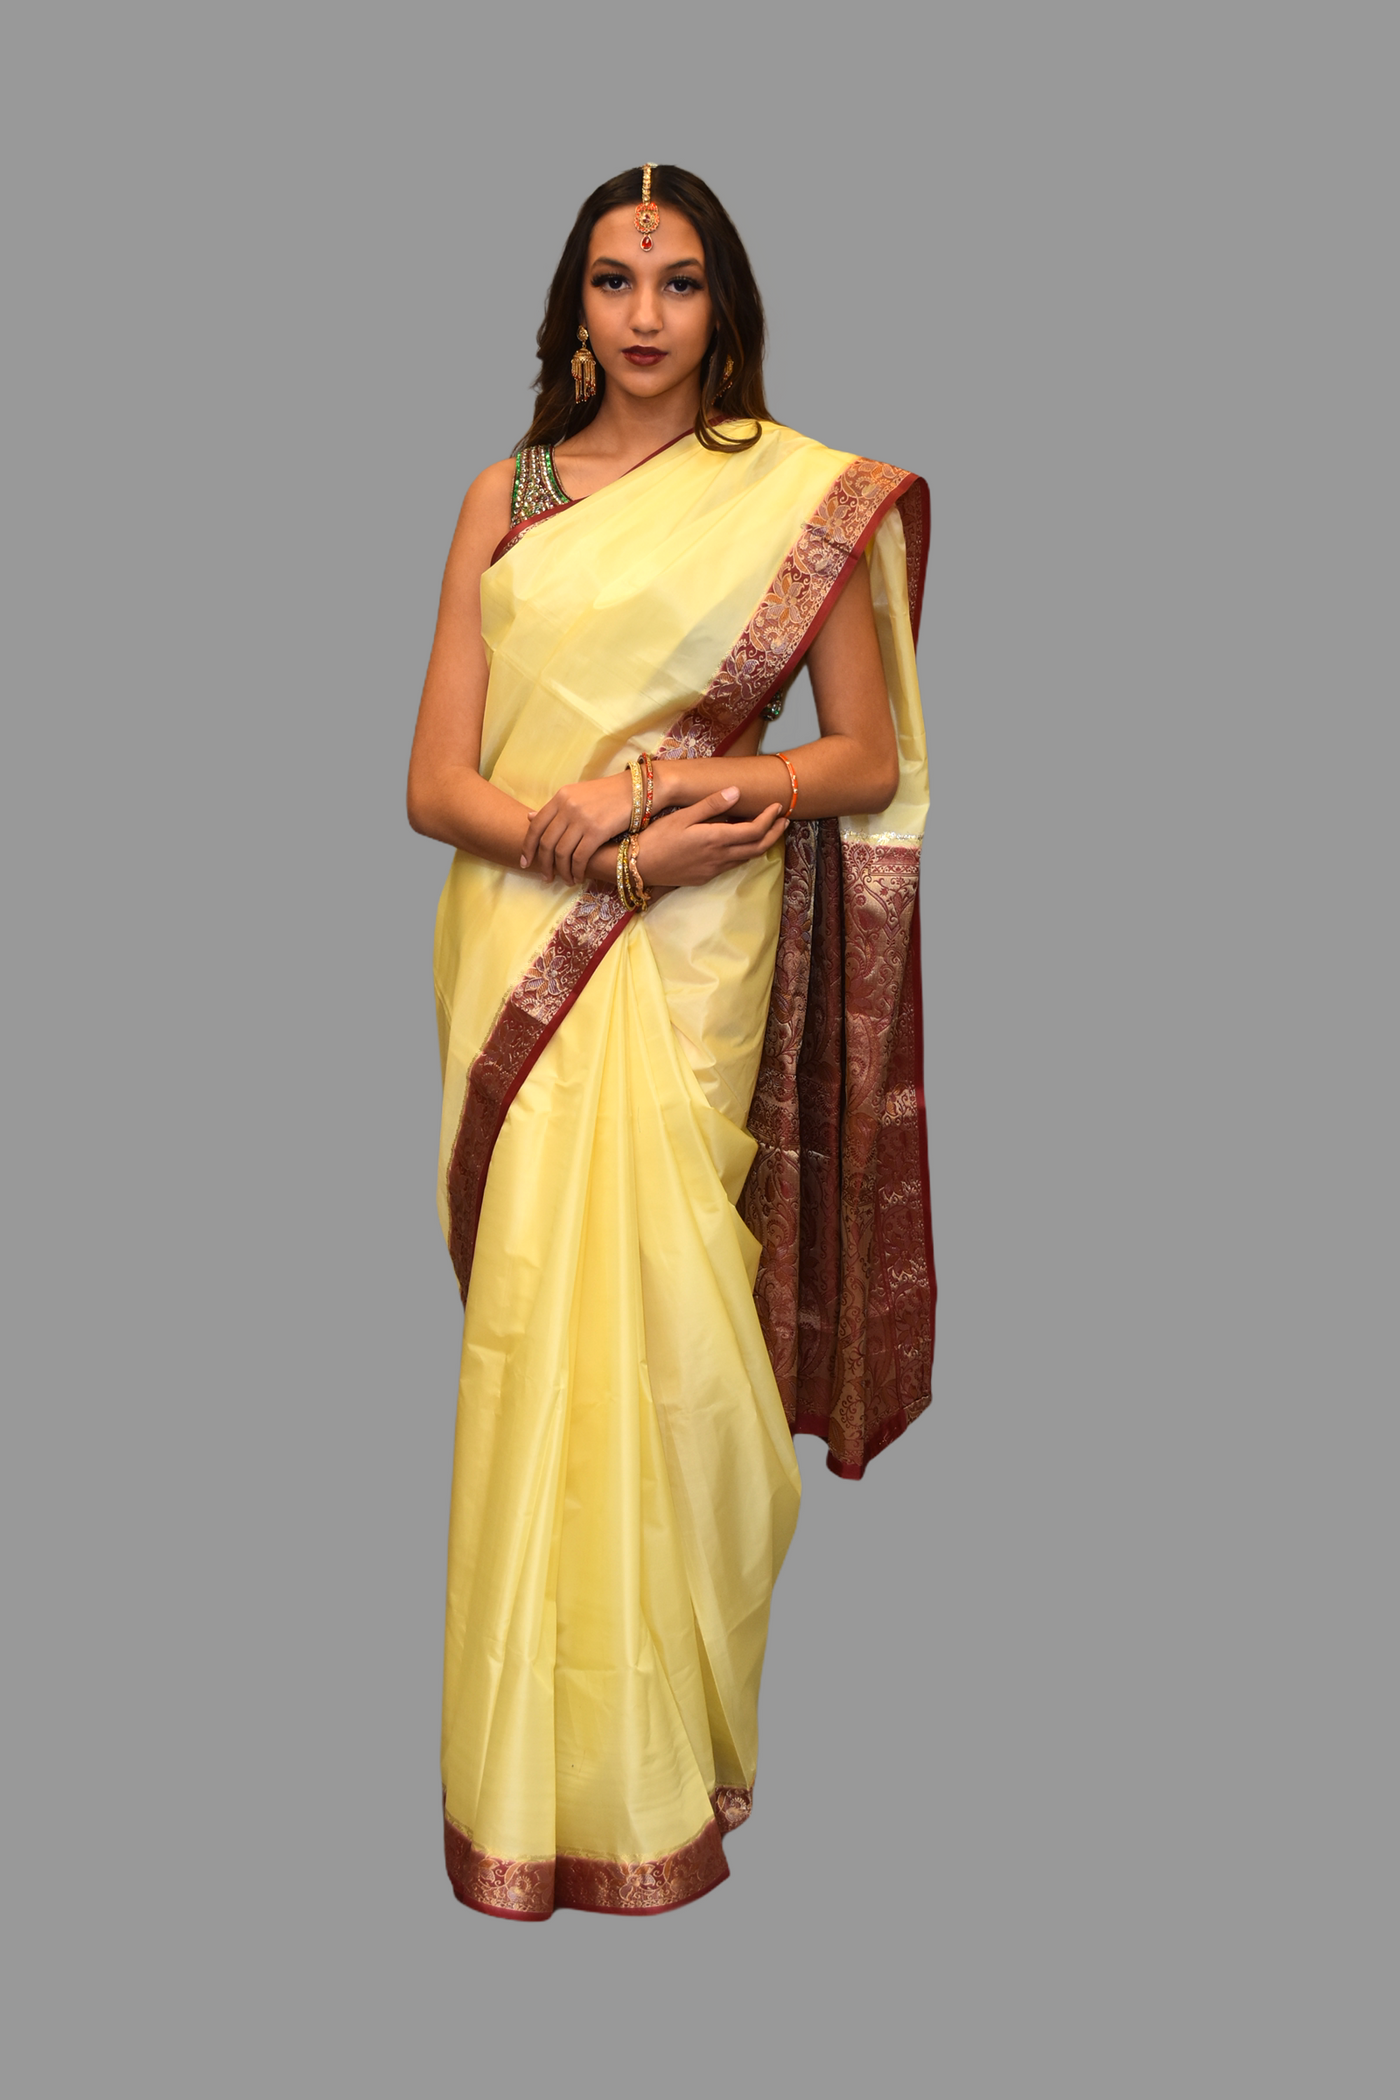 Indian New Traditional Designer Saree Wedding Beige Partywear Embroidery  Sari | eBay